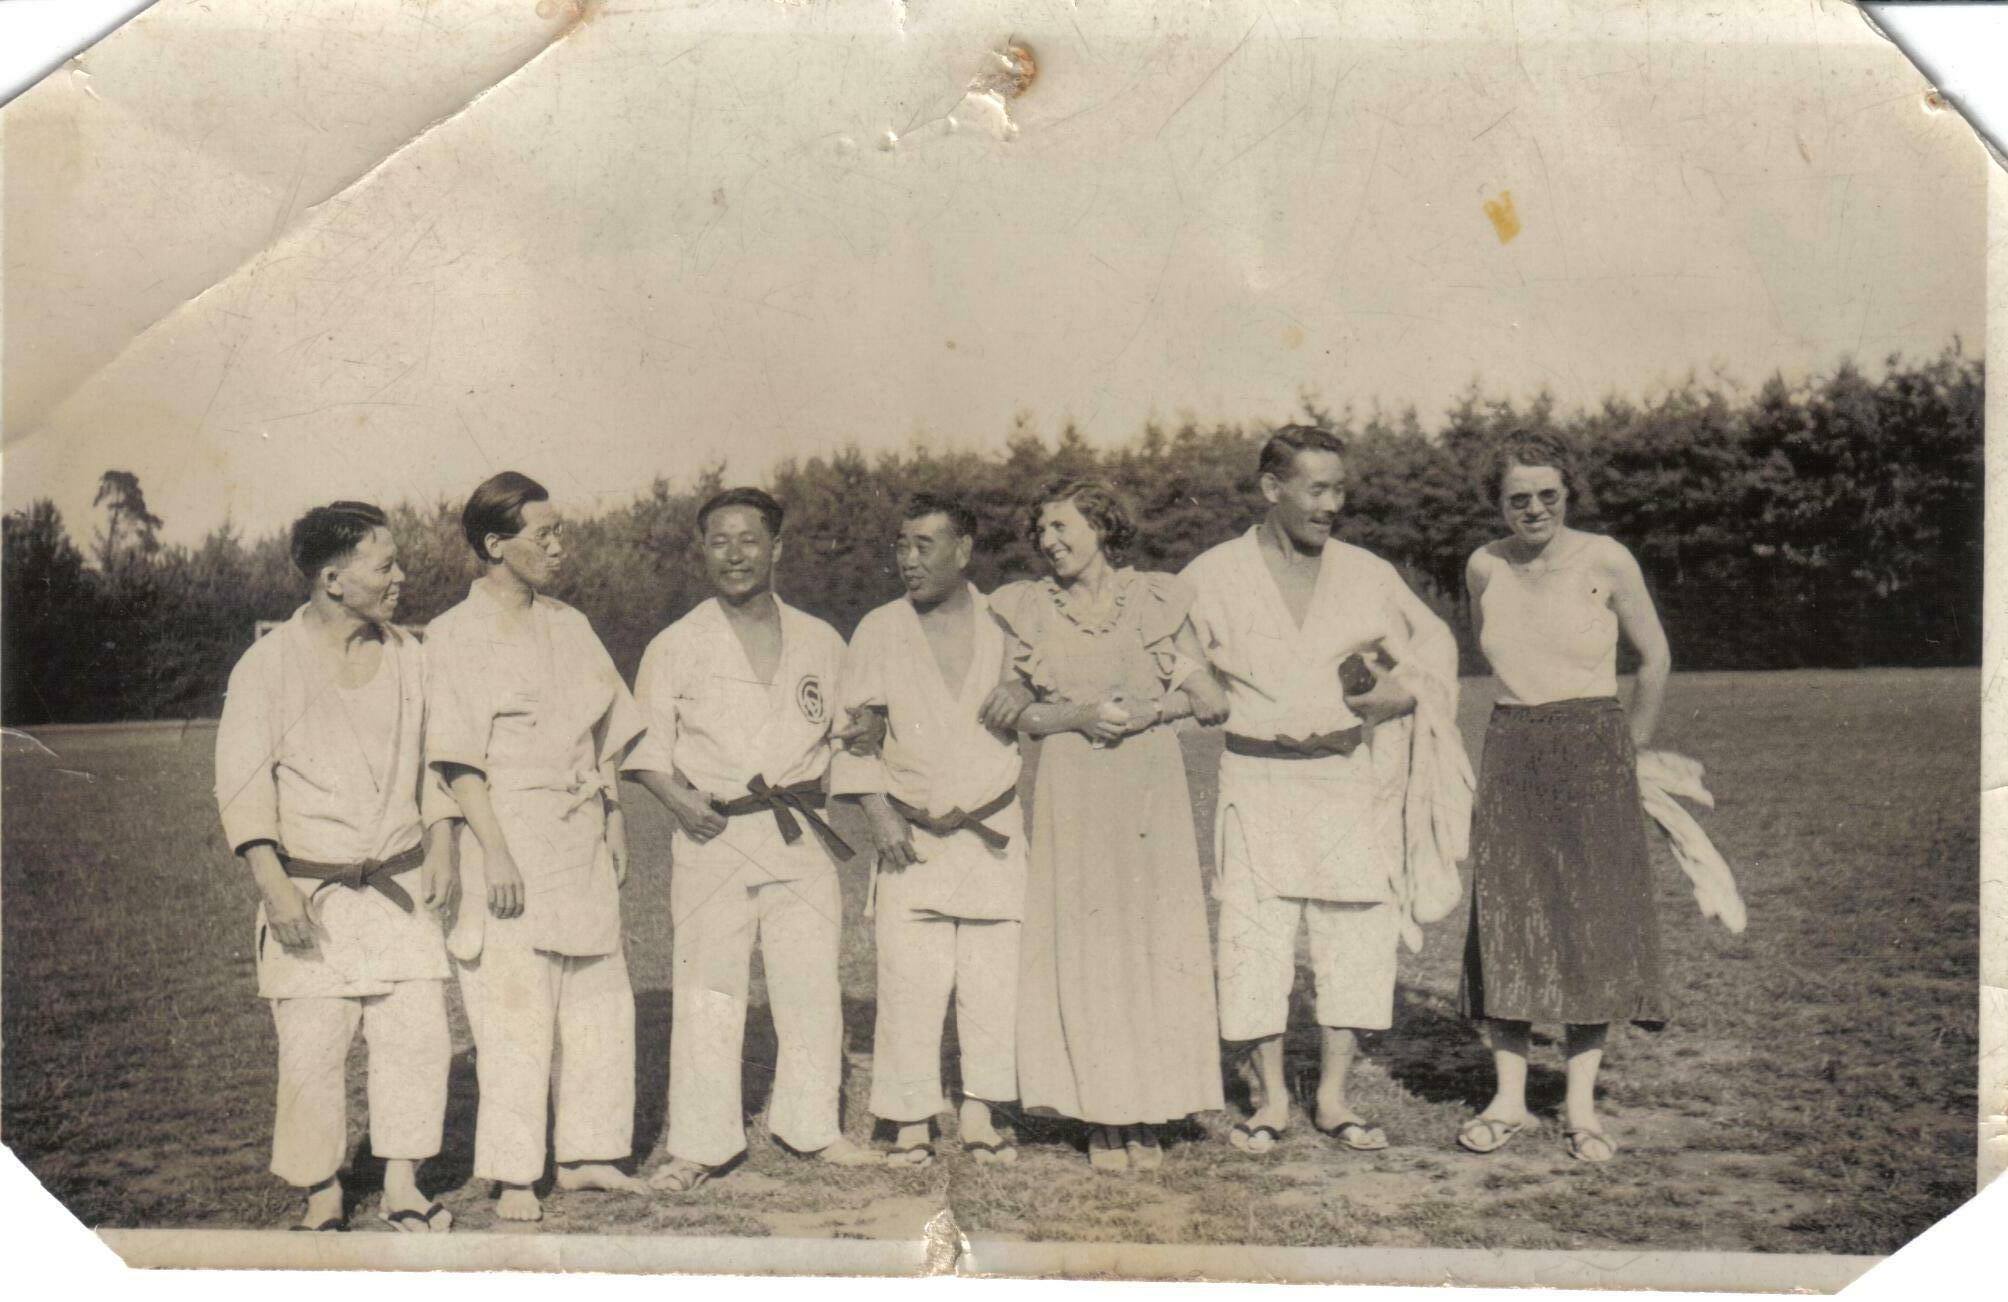 Kitajama - fotografie učitelů judo na letní škole z Frankfurtu nad Mohanem z roku 1933